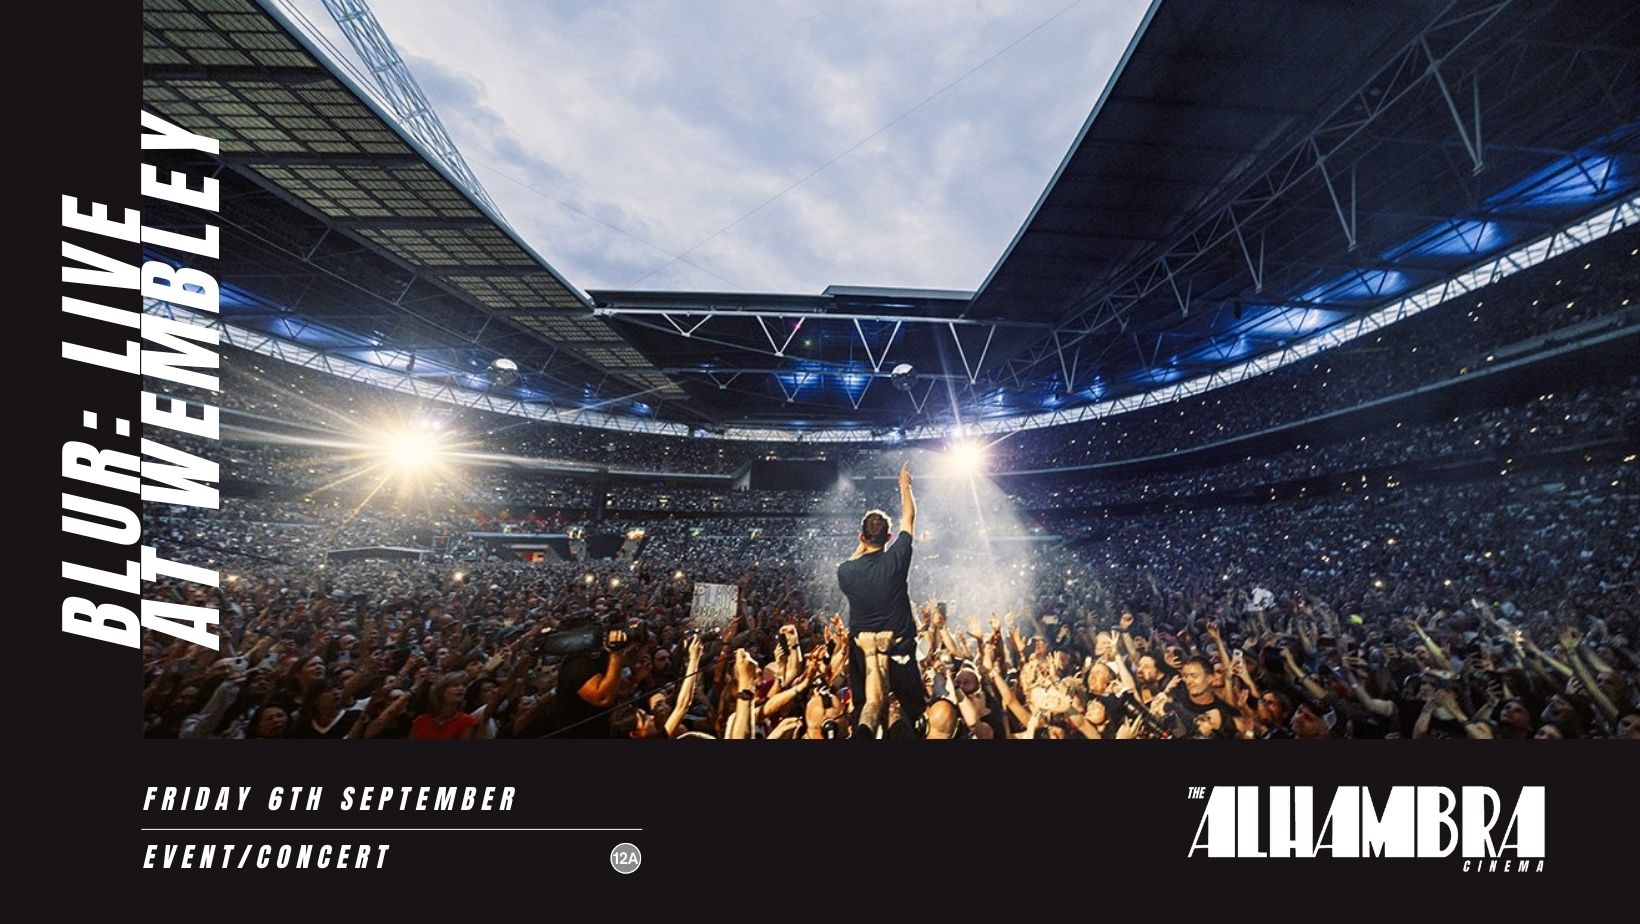 blur: Live at Wembley Stadium